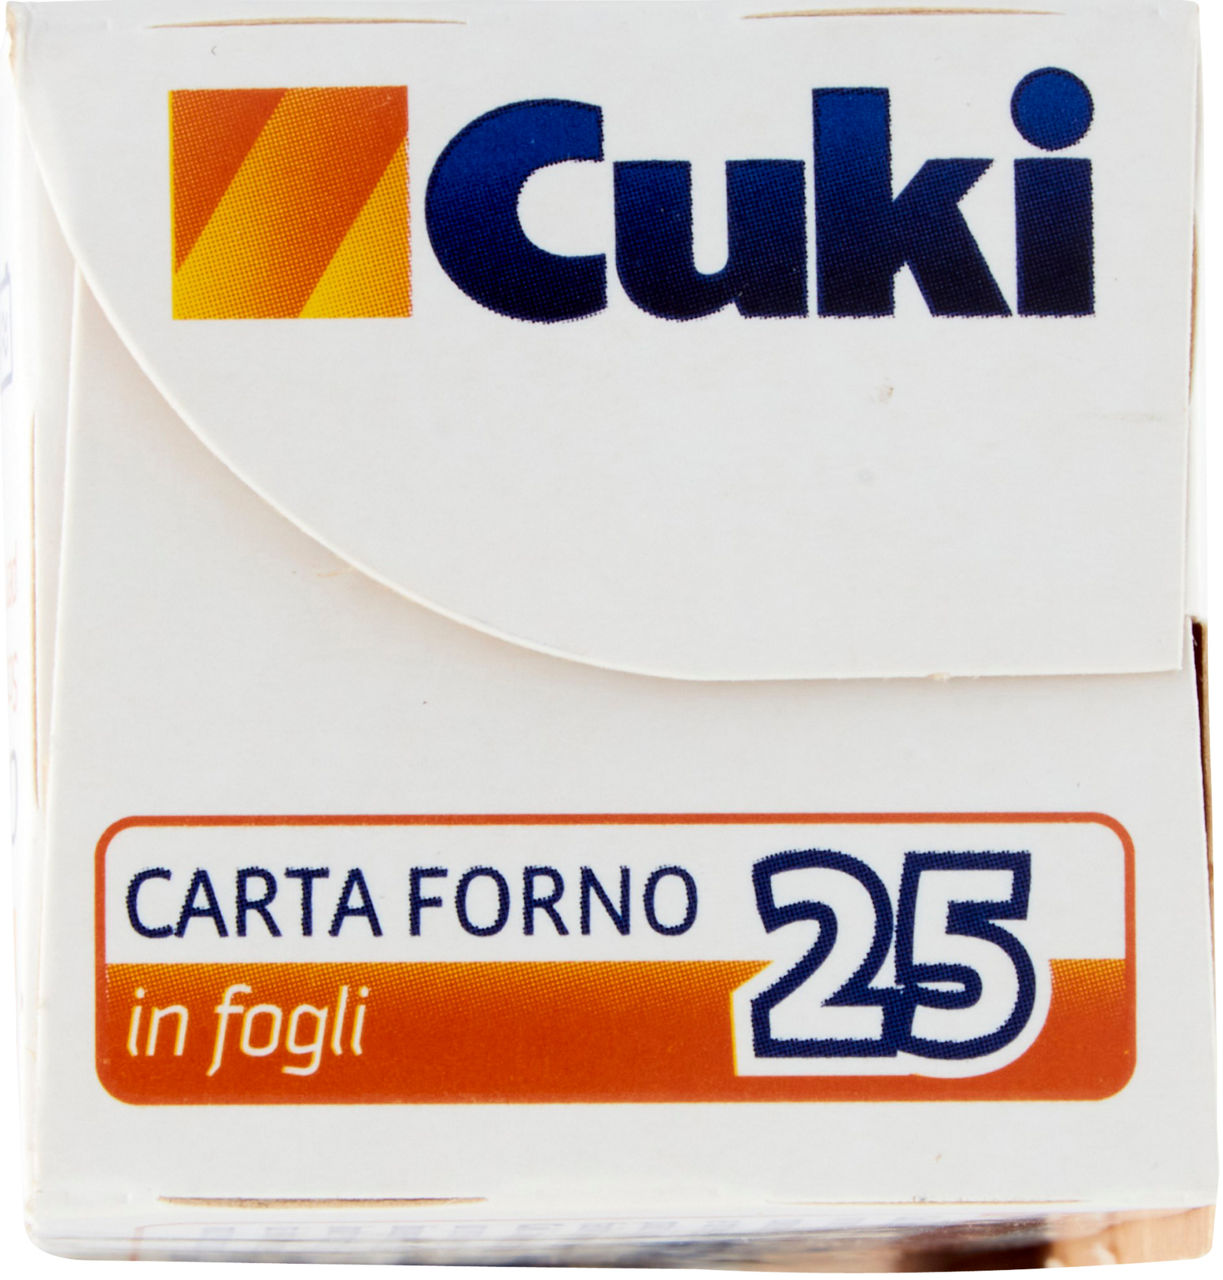 CARTA FORNO CUKI 9,5 MT. FOGLI CM.33X38 X 25 SCATOLA PZ.1 - 1